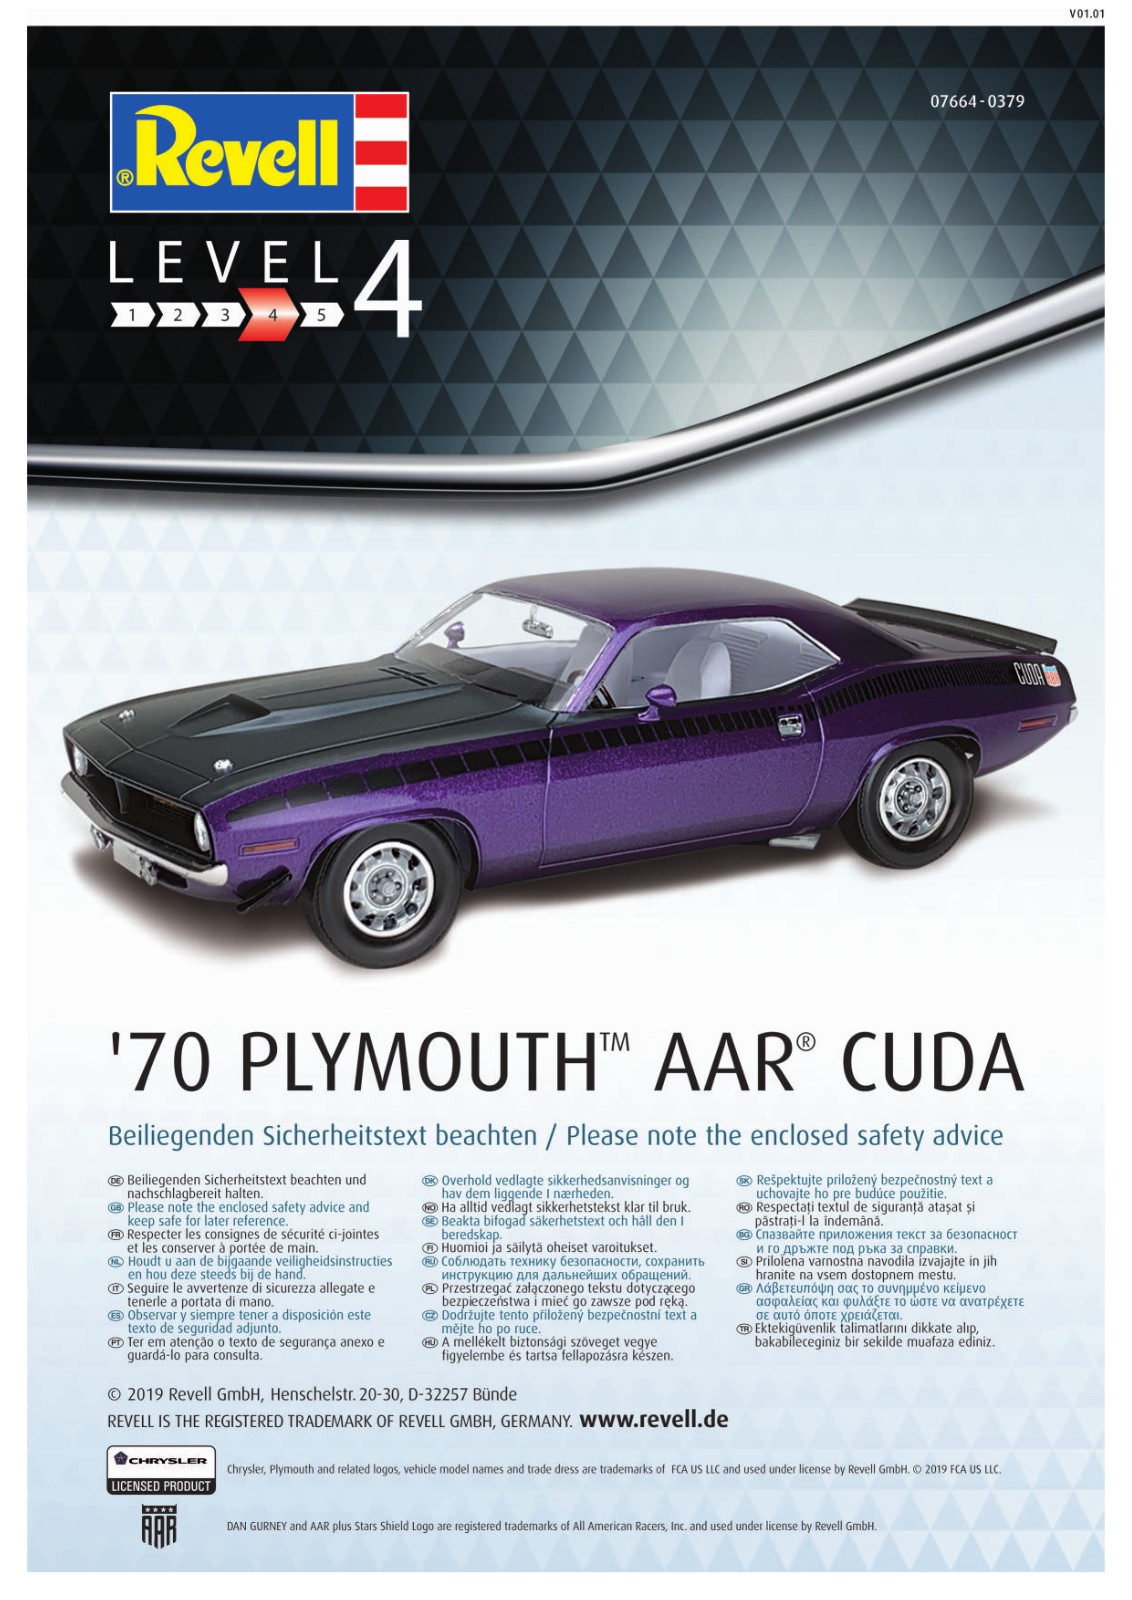 Revell 70 Plymouth AAR Cuda Service Manual